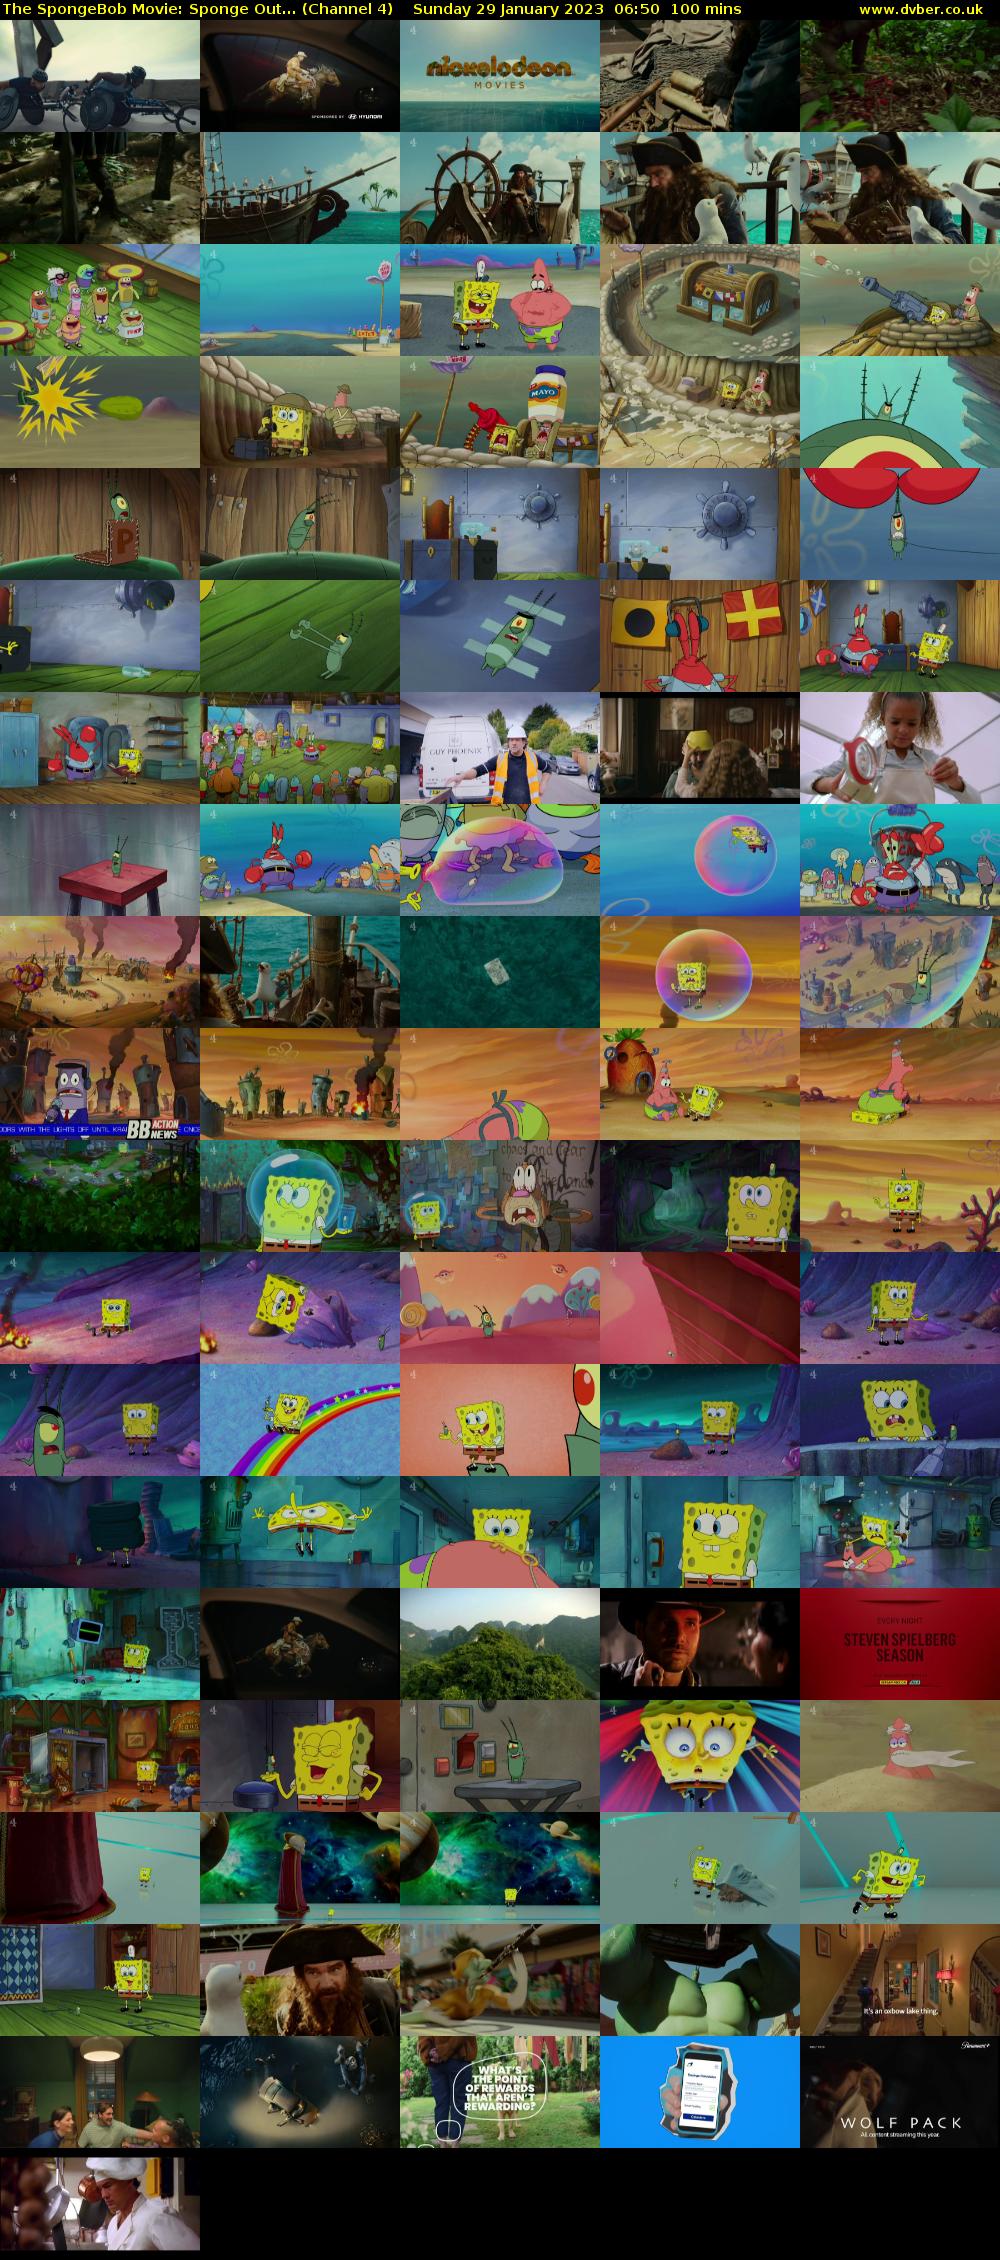 The SpongeBob Movie: Sponge Out... (Channel 4) Sunday 29 January 2023 06:50 - 08:30